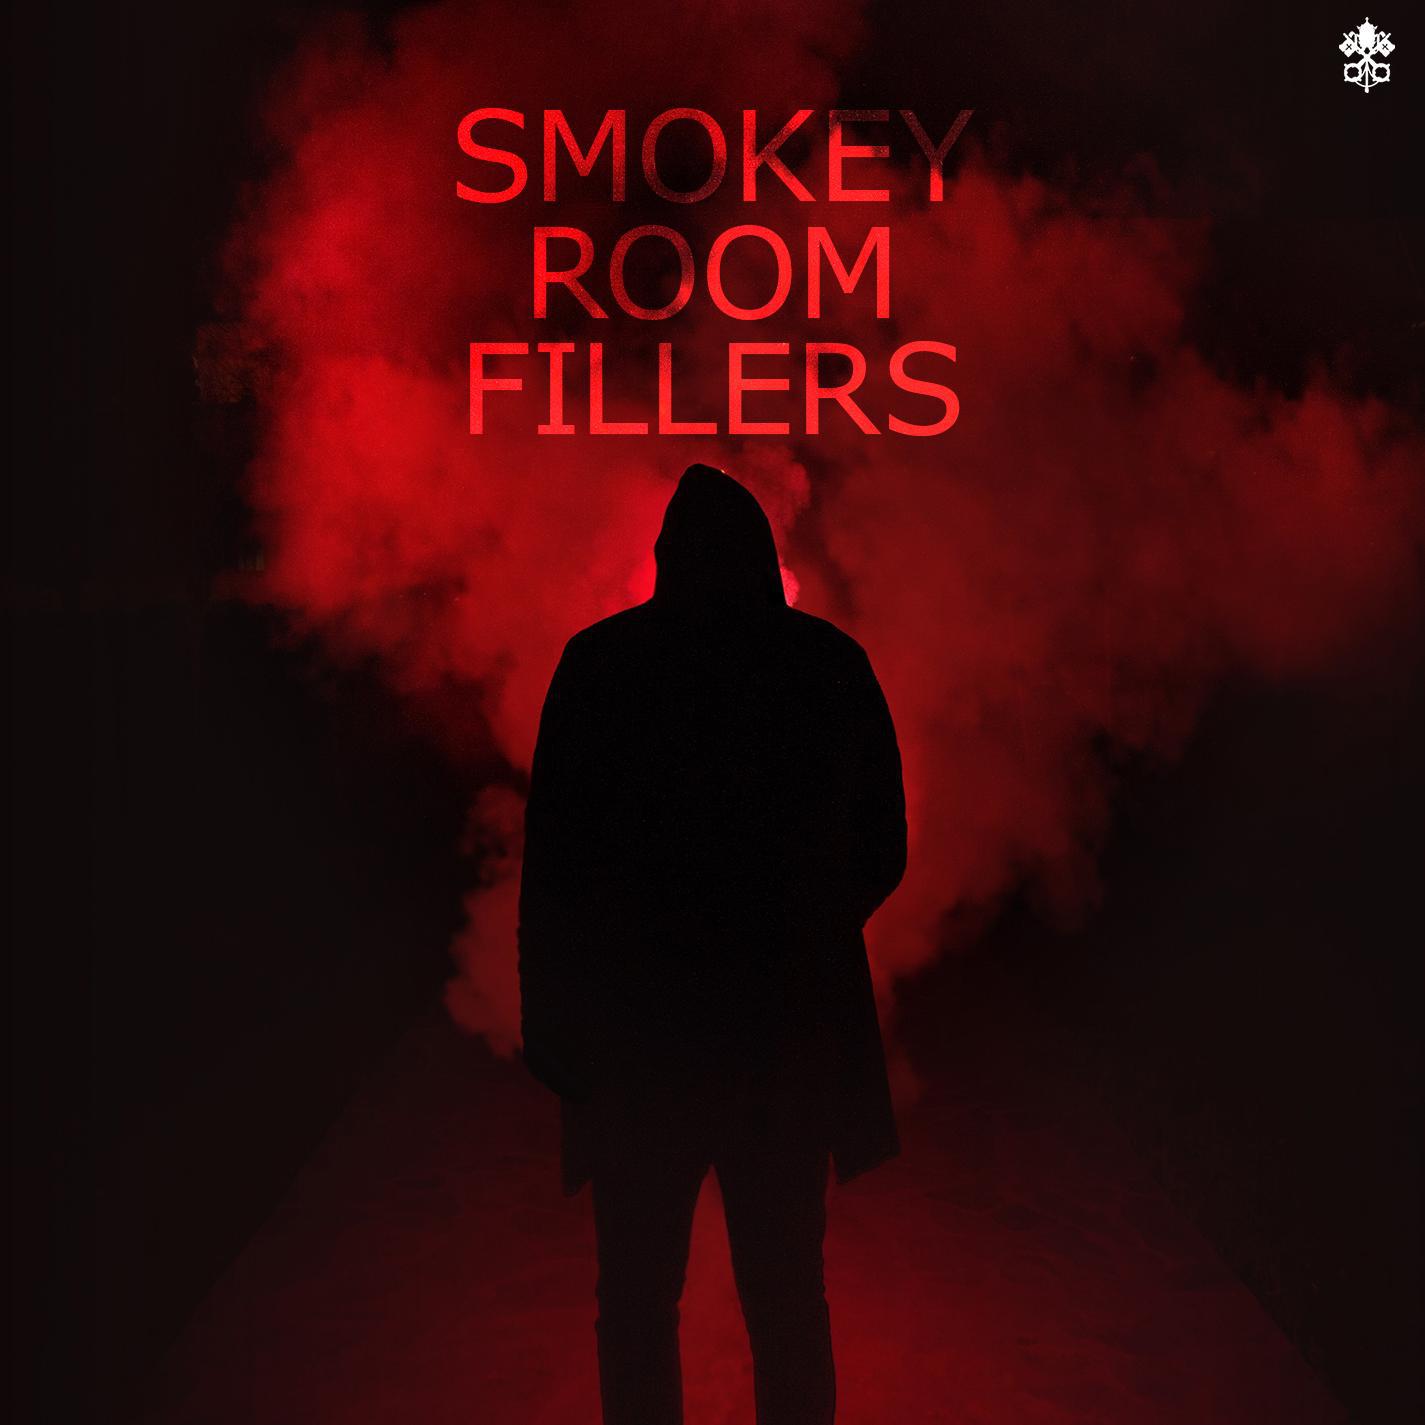 Smokey Room Fillers